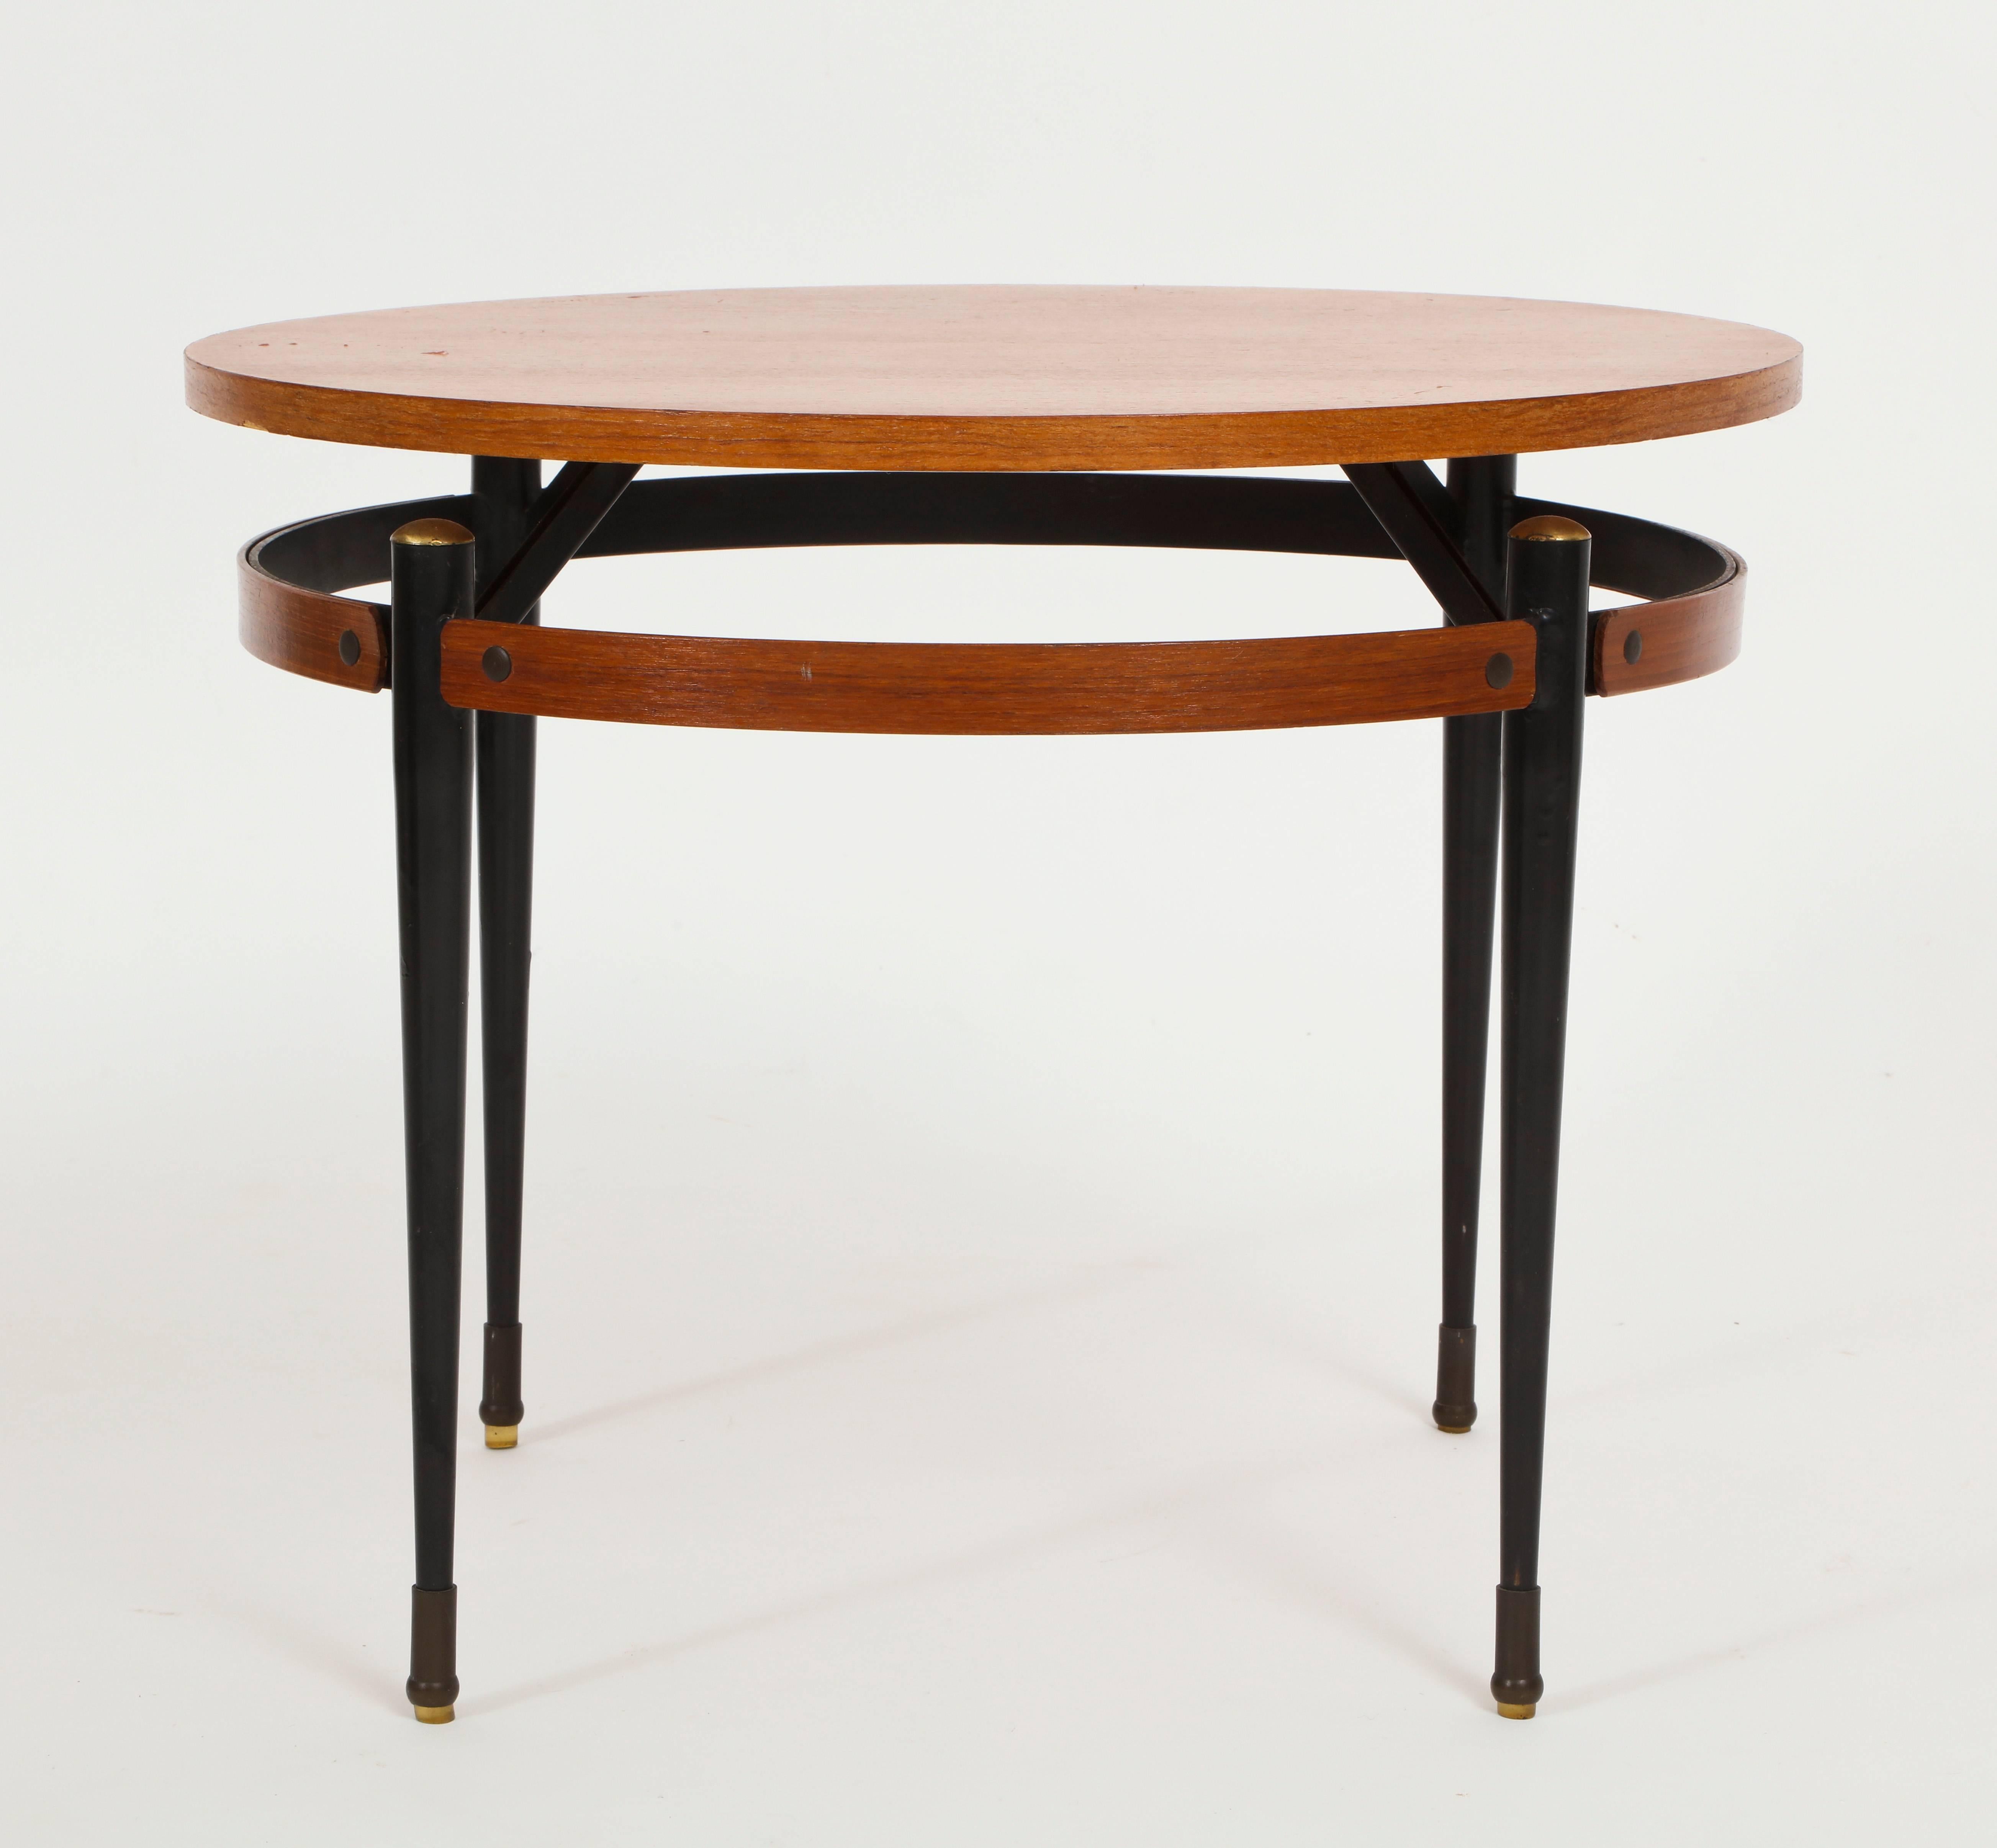 Italian Ponti style round side table with metal legs, Italy, 1950, Mid-Century.

Lovely wood Italian side table or coffee table. With metal and brass detailing.
Beautiful Mid-Century table.
   